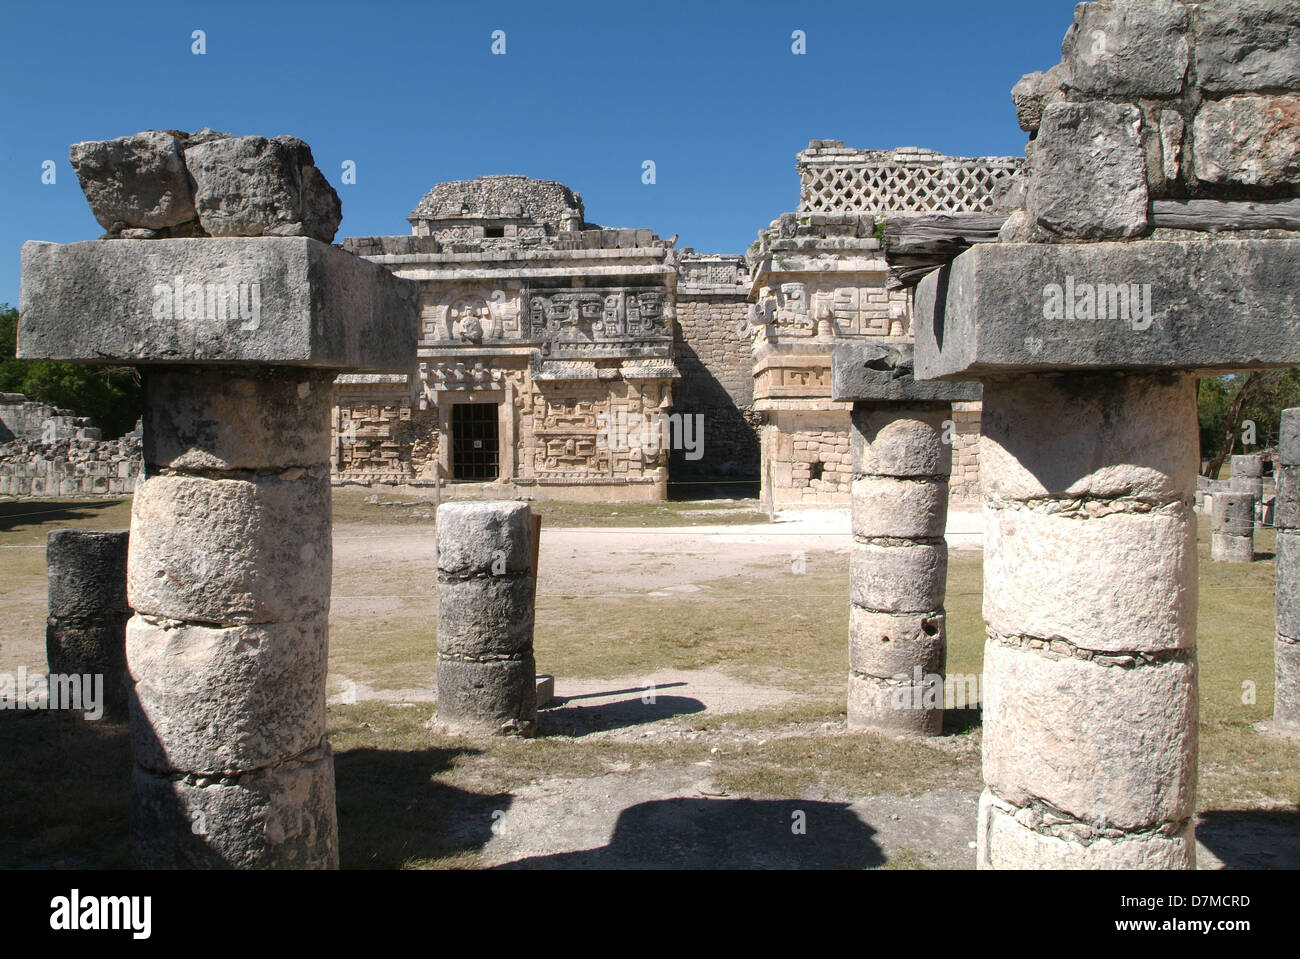 Archeological site of Chichen Itza on Yucatan, Mexico Stock Photo